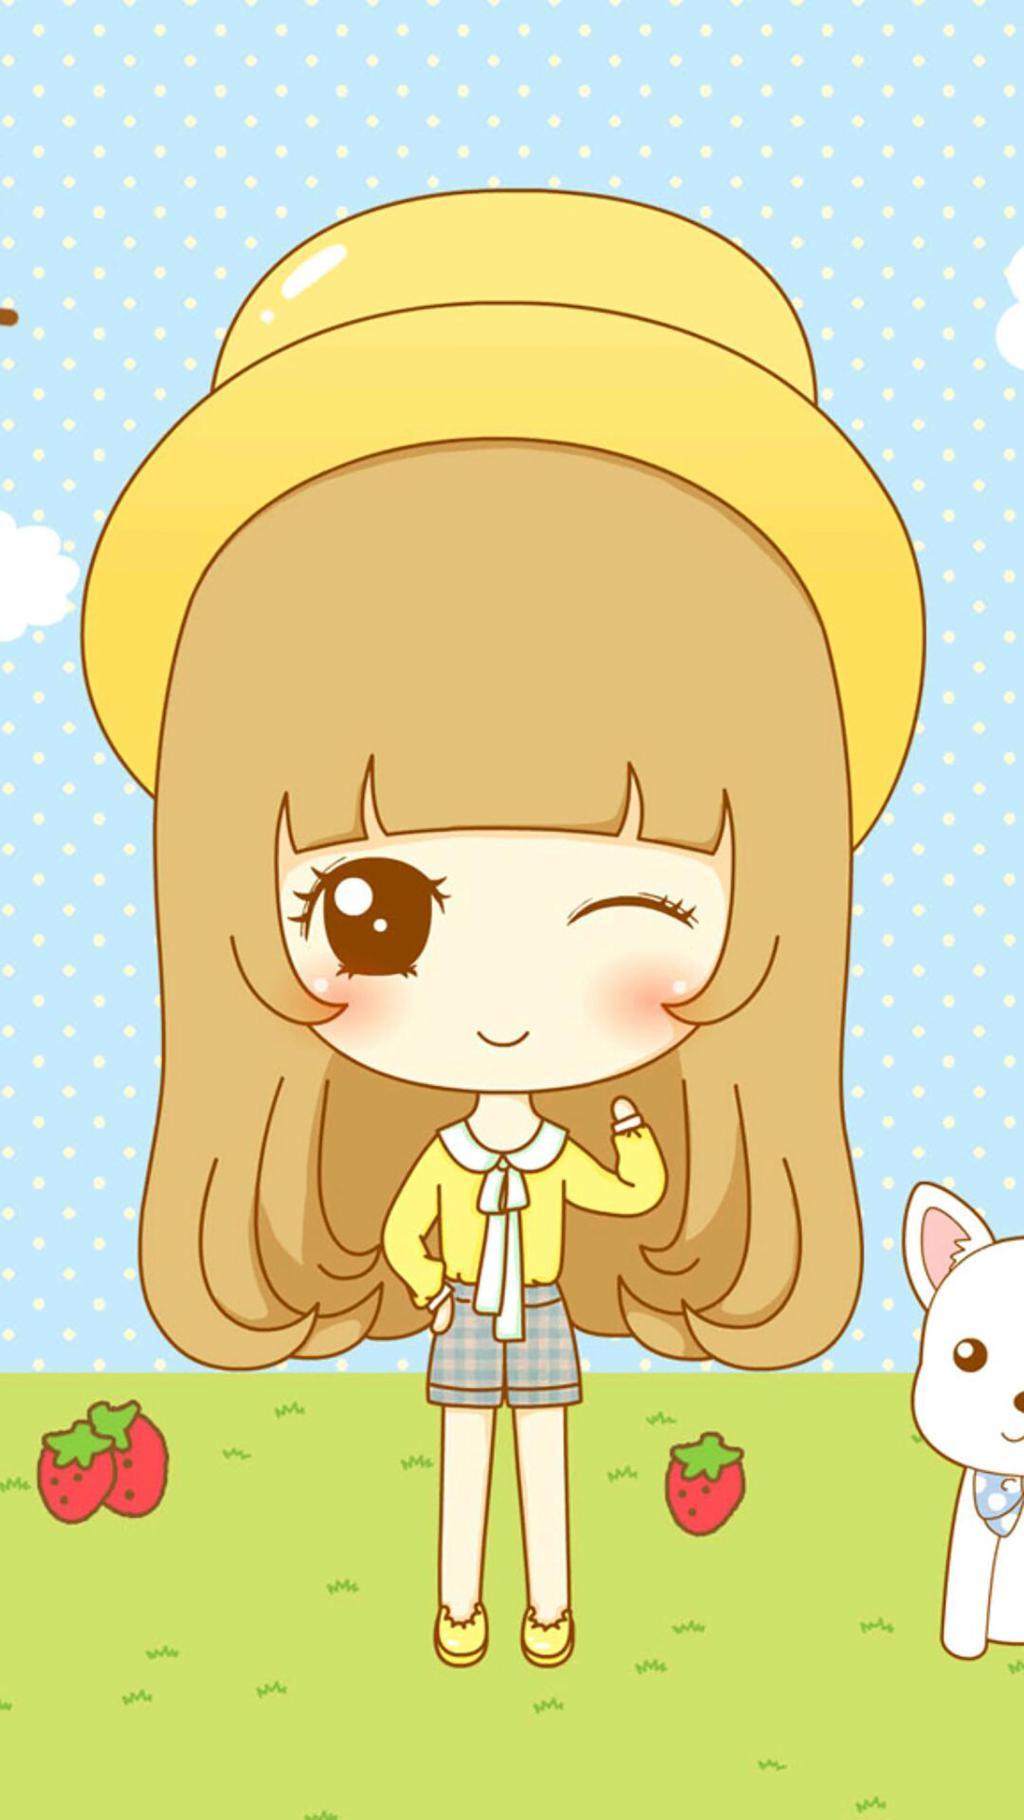 Cute cartoon little girl mobile phone wallpaper, HD picture